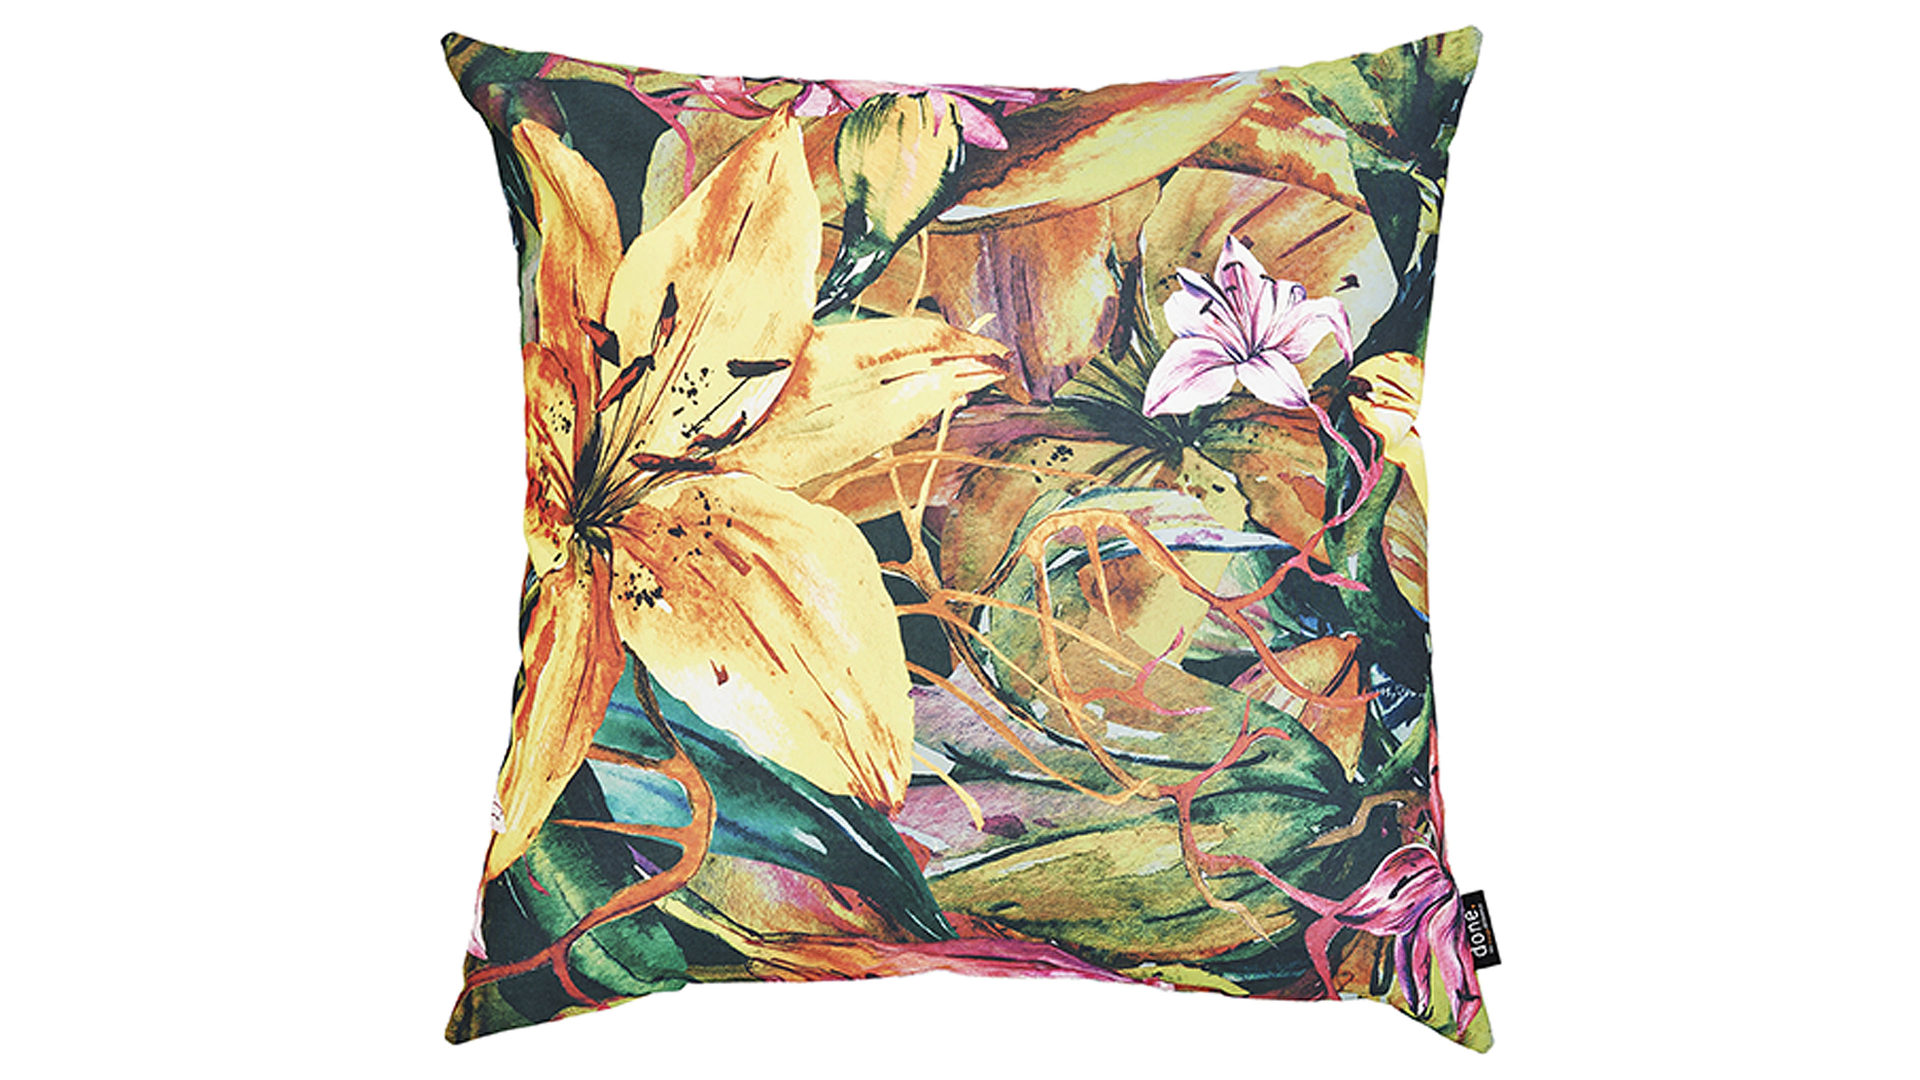 Einzelkissen Done® be different aus Kunstfaser in Mehrfarbig DONE® Kissen Cushion Outside Yellow Lily Dessin Lilie – ca. 65 x 65 cm